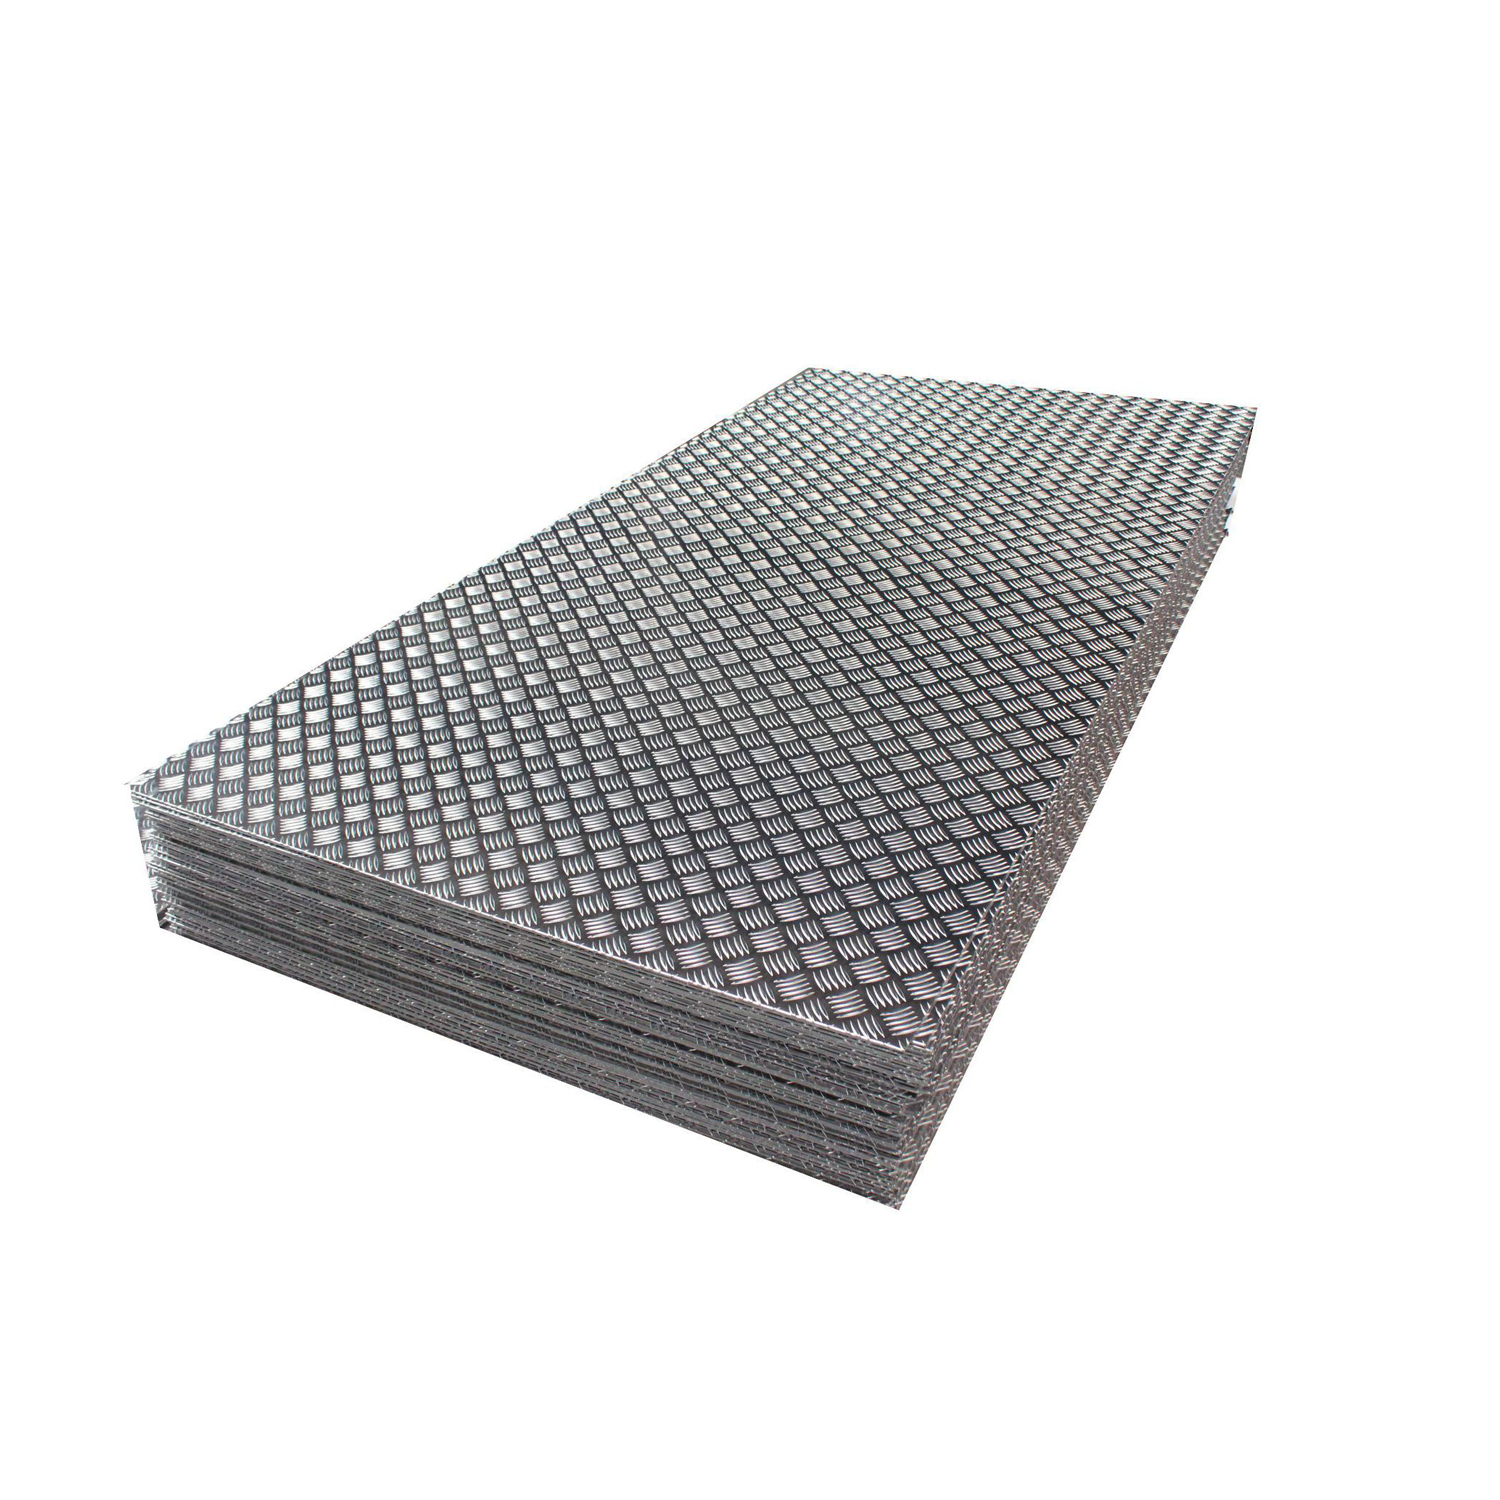 304s Q195 Q235B Etc. Galvanized Hot Rolled Steel Checkered Plate for Marine Materials Etc. Customizable